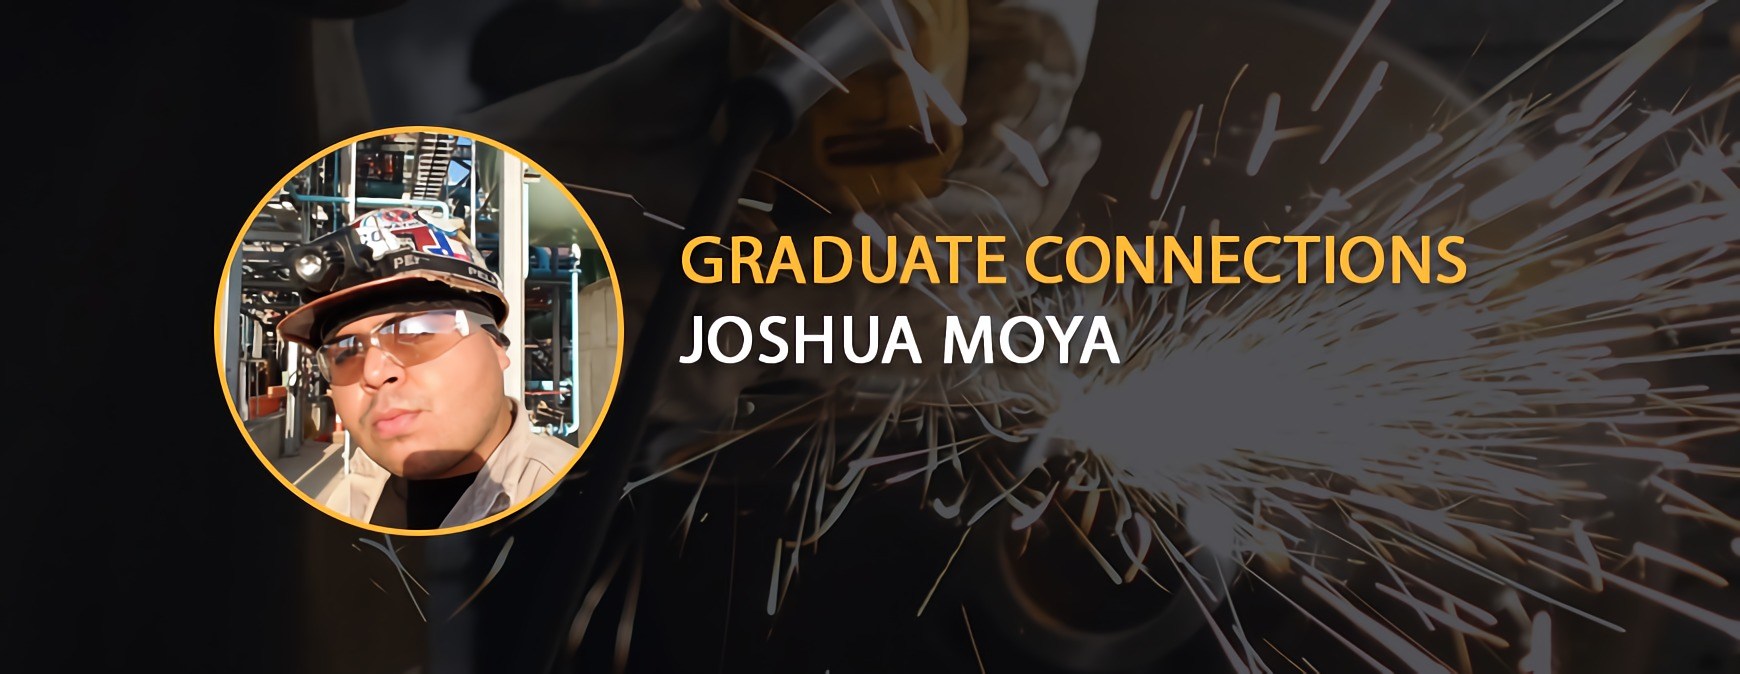 Conexión de Graduados Joshua Moya